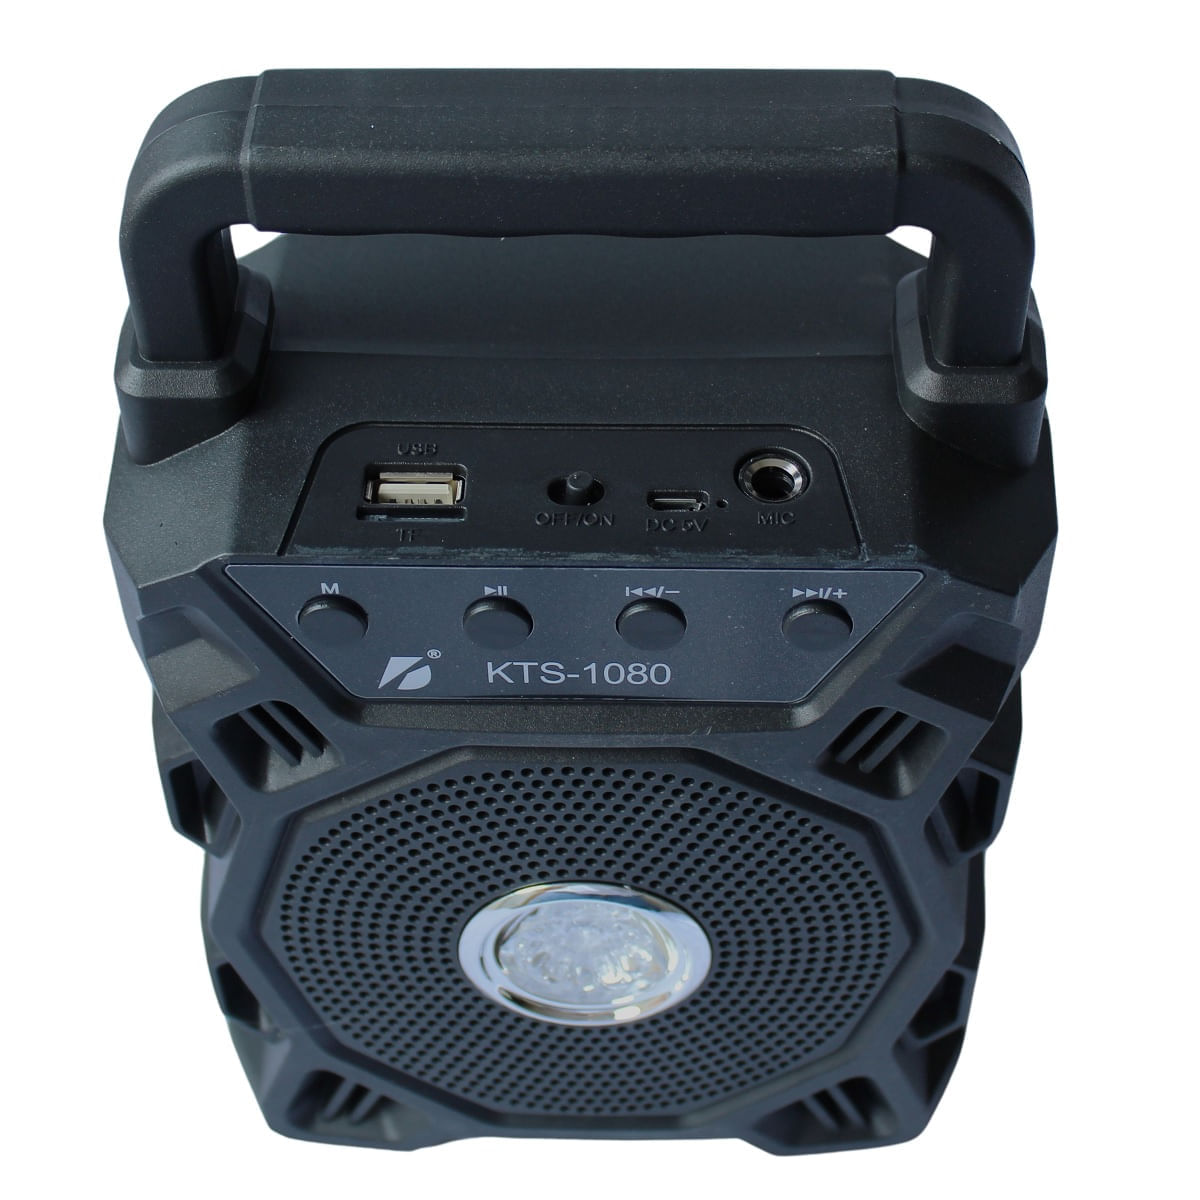 Parlante Bluetooth Portatil 01 Recargable Radio FM y USB - Agaval